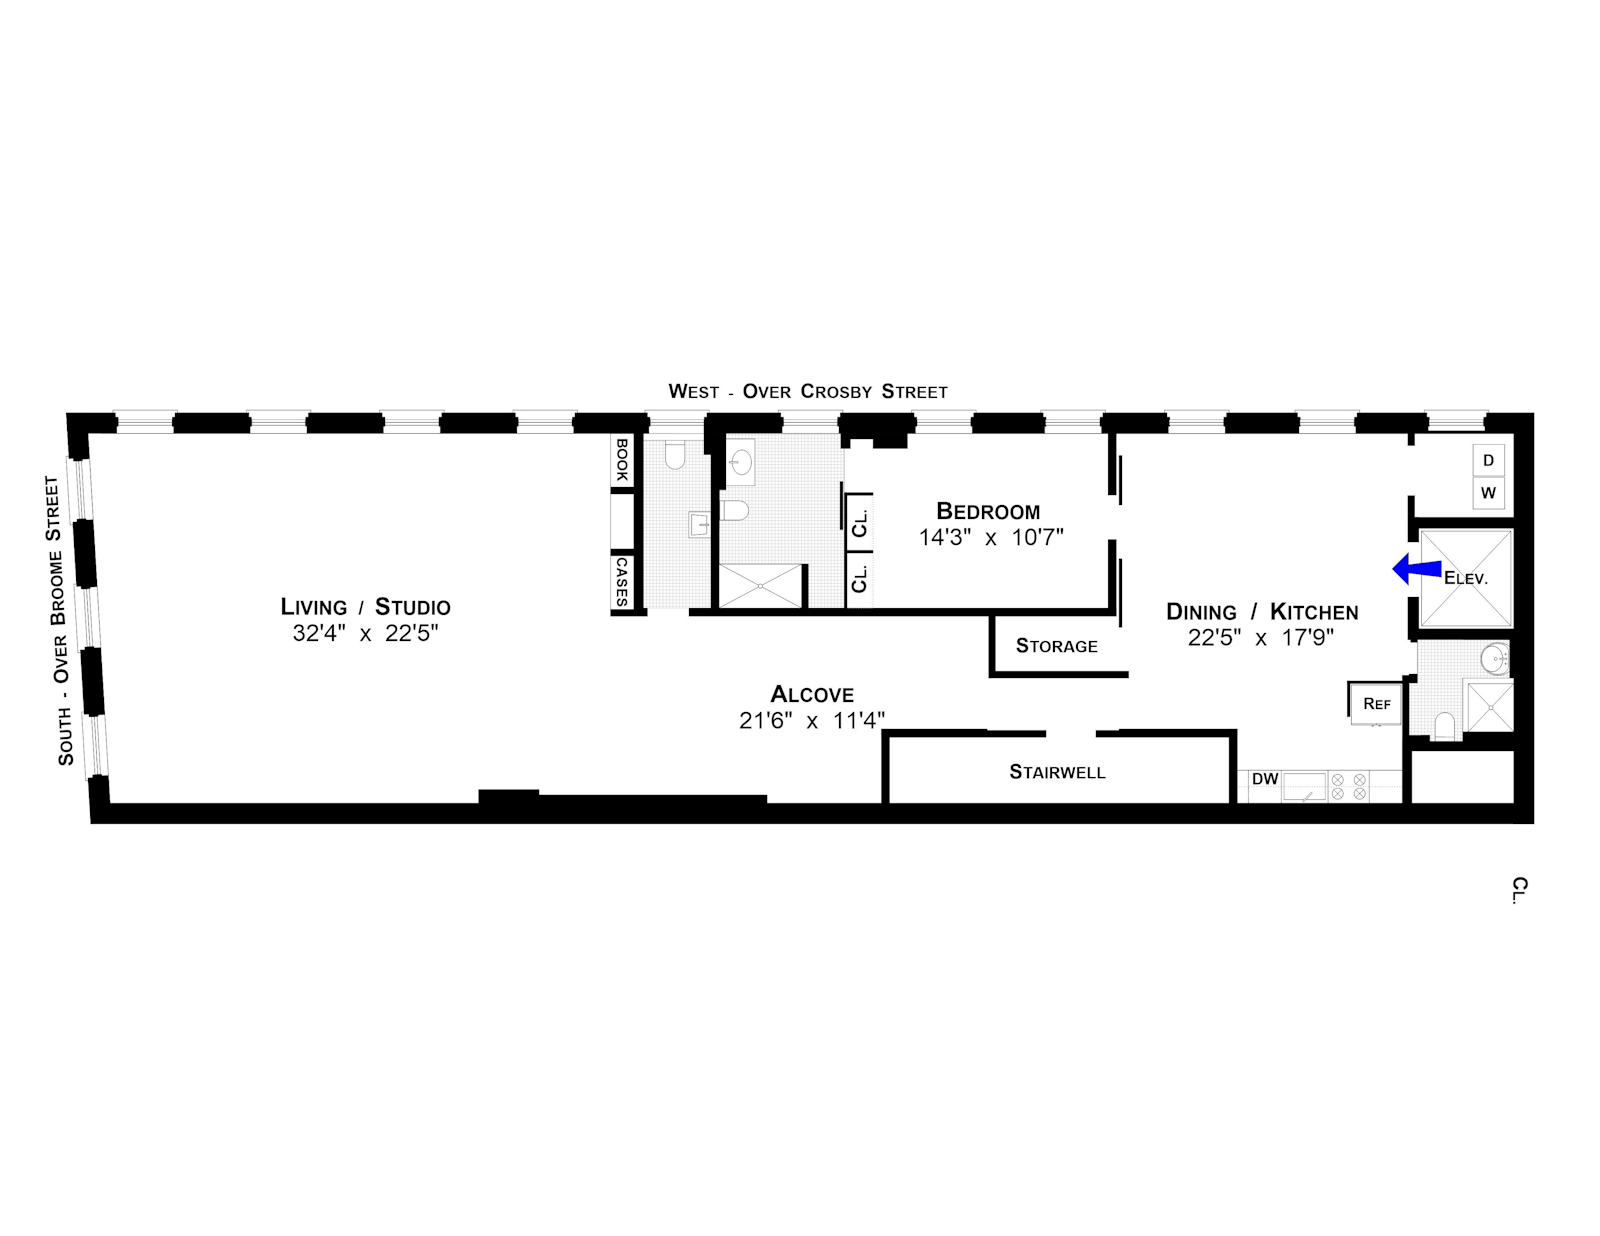 Floorplan for 39 Crosby Street, 4